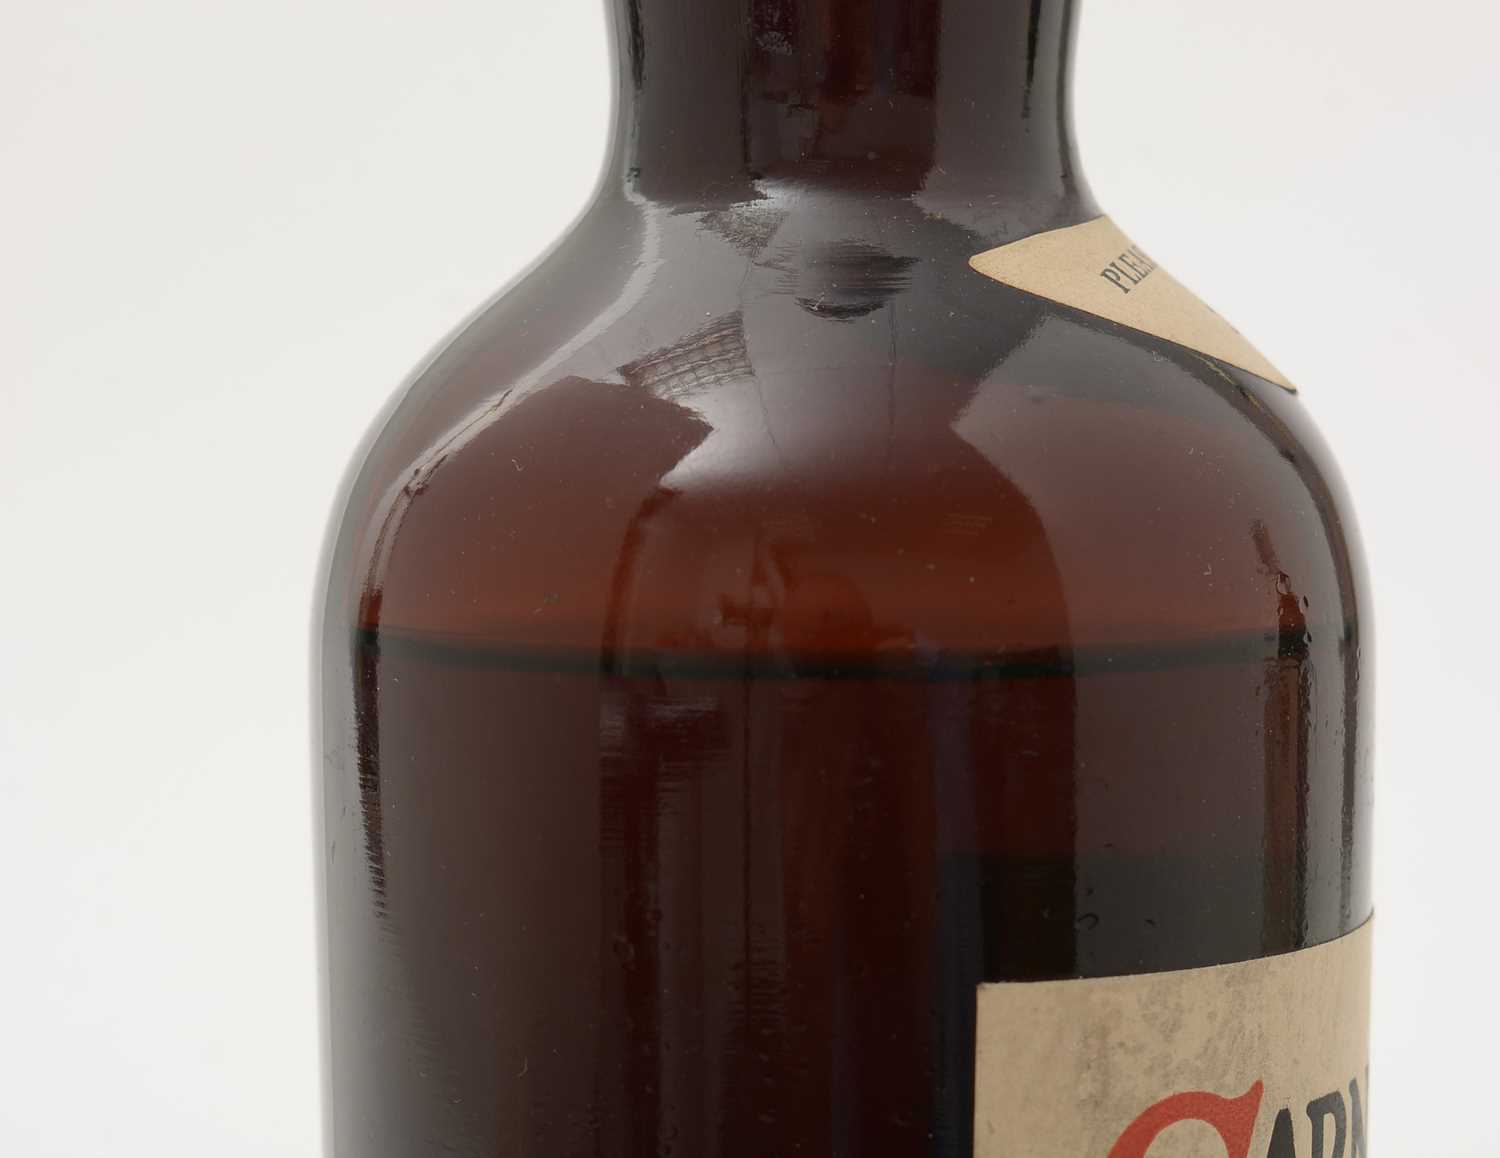 Carnoustie Liqueur Special Scotch Whisky, one bottle - Image 8 of 8